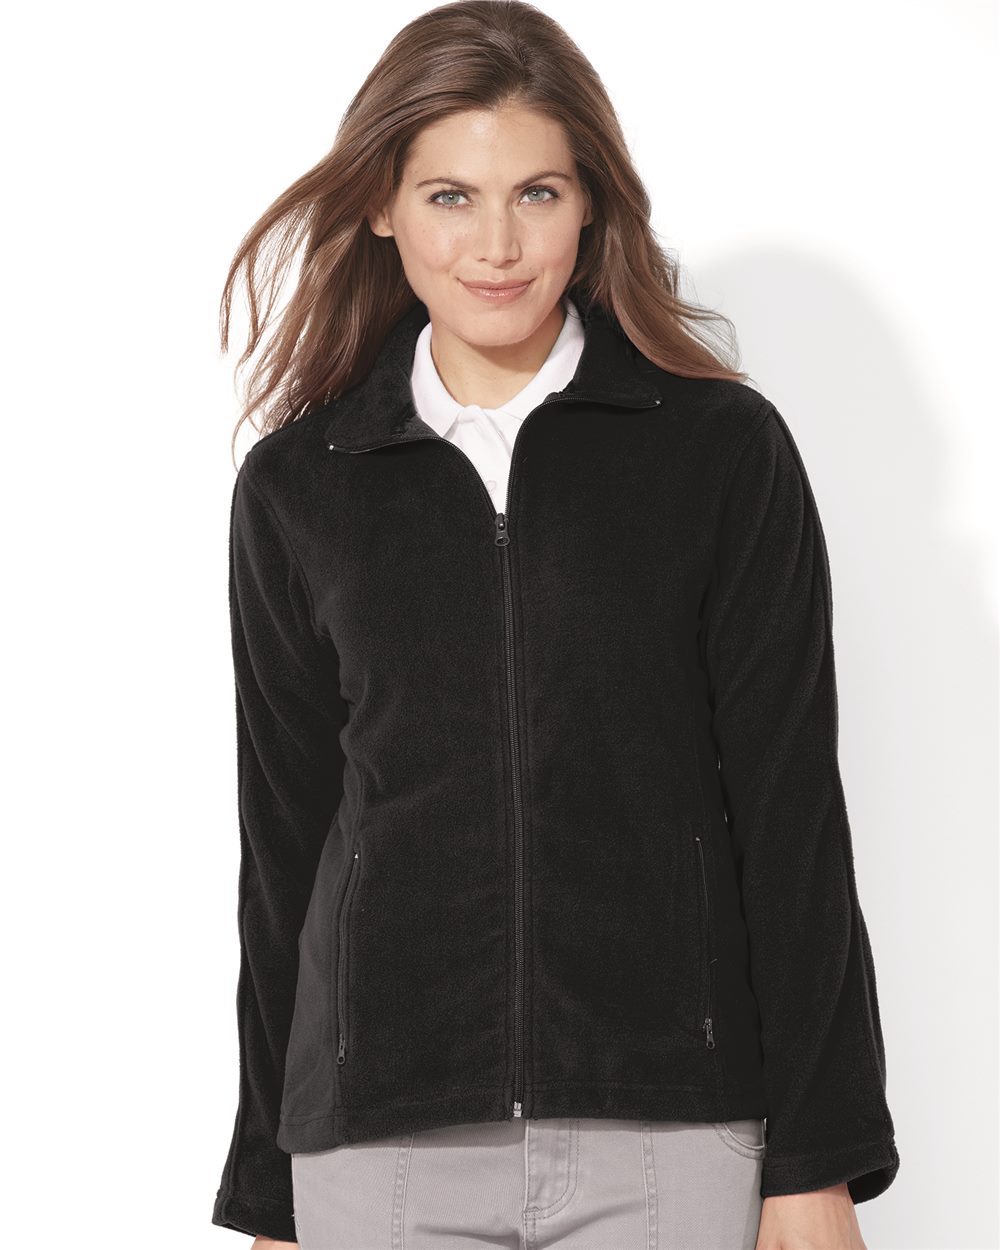 Sierra Pacific 5301 - Women's Microfleece Full-Zip Jacket